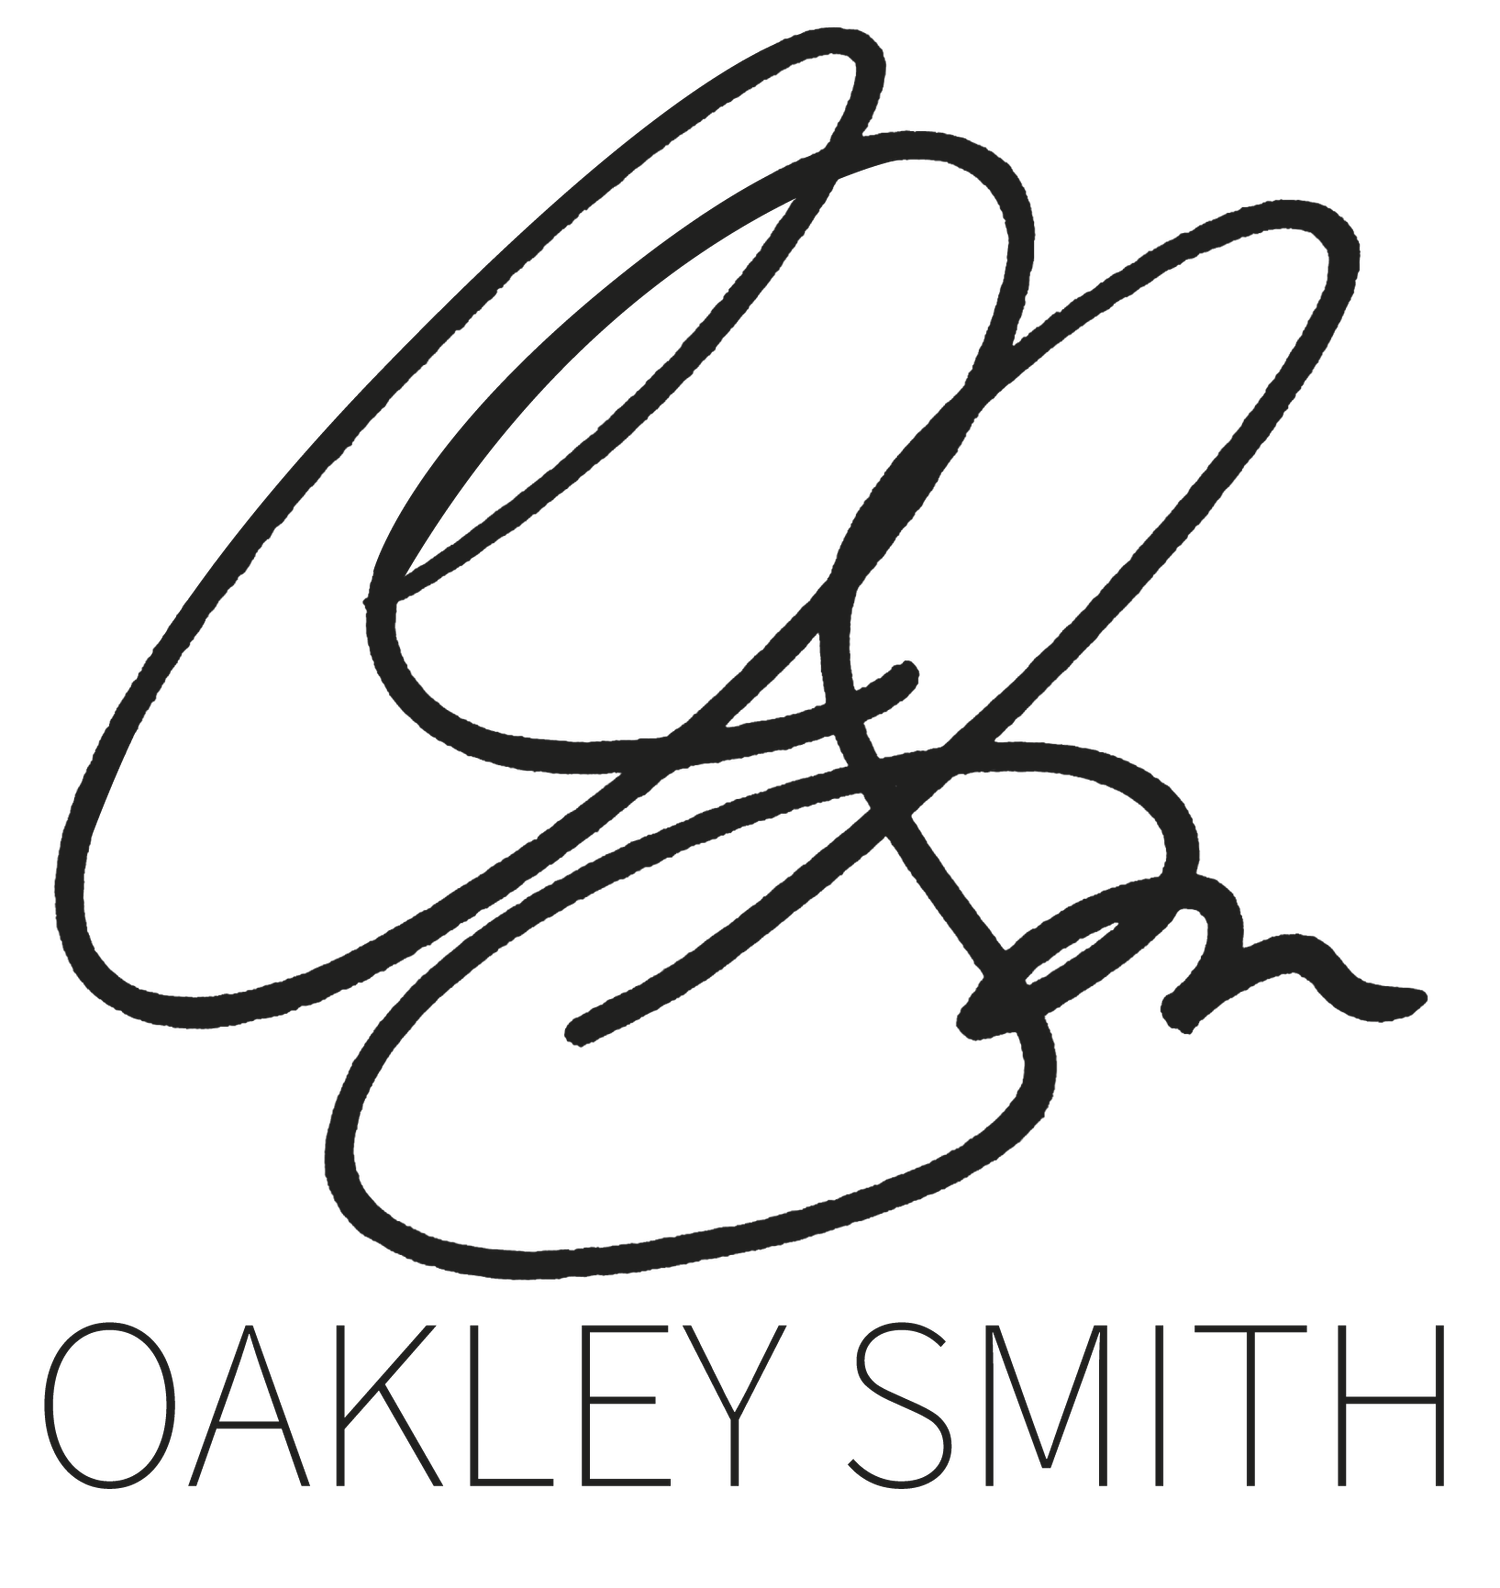 Oakley Smith